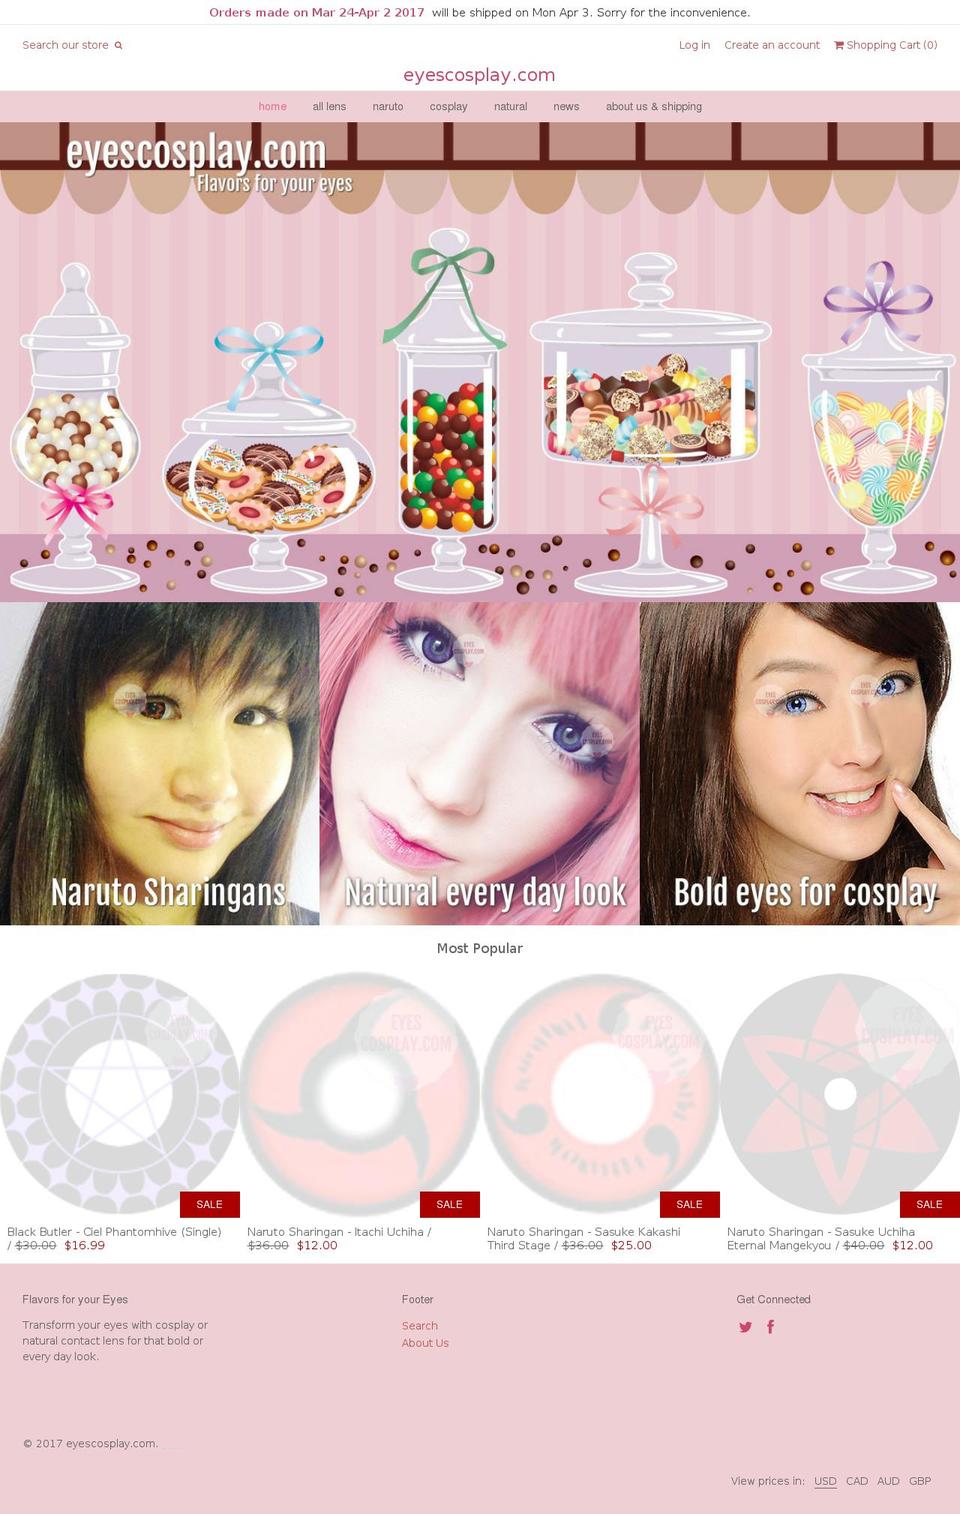 eyescosplay.com shopify website screenshot